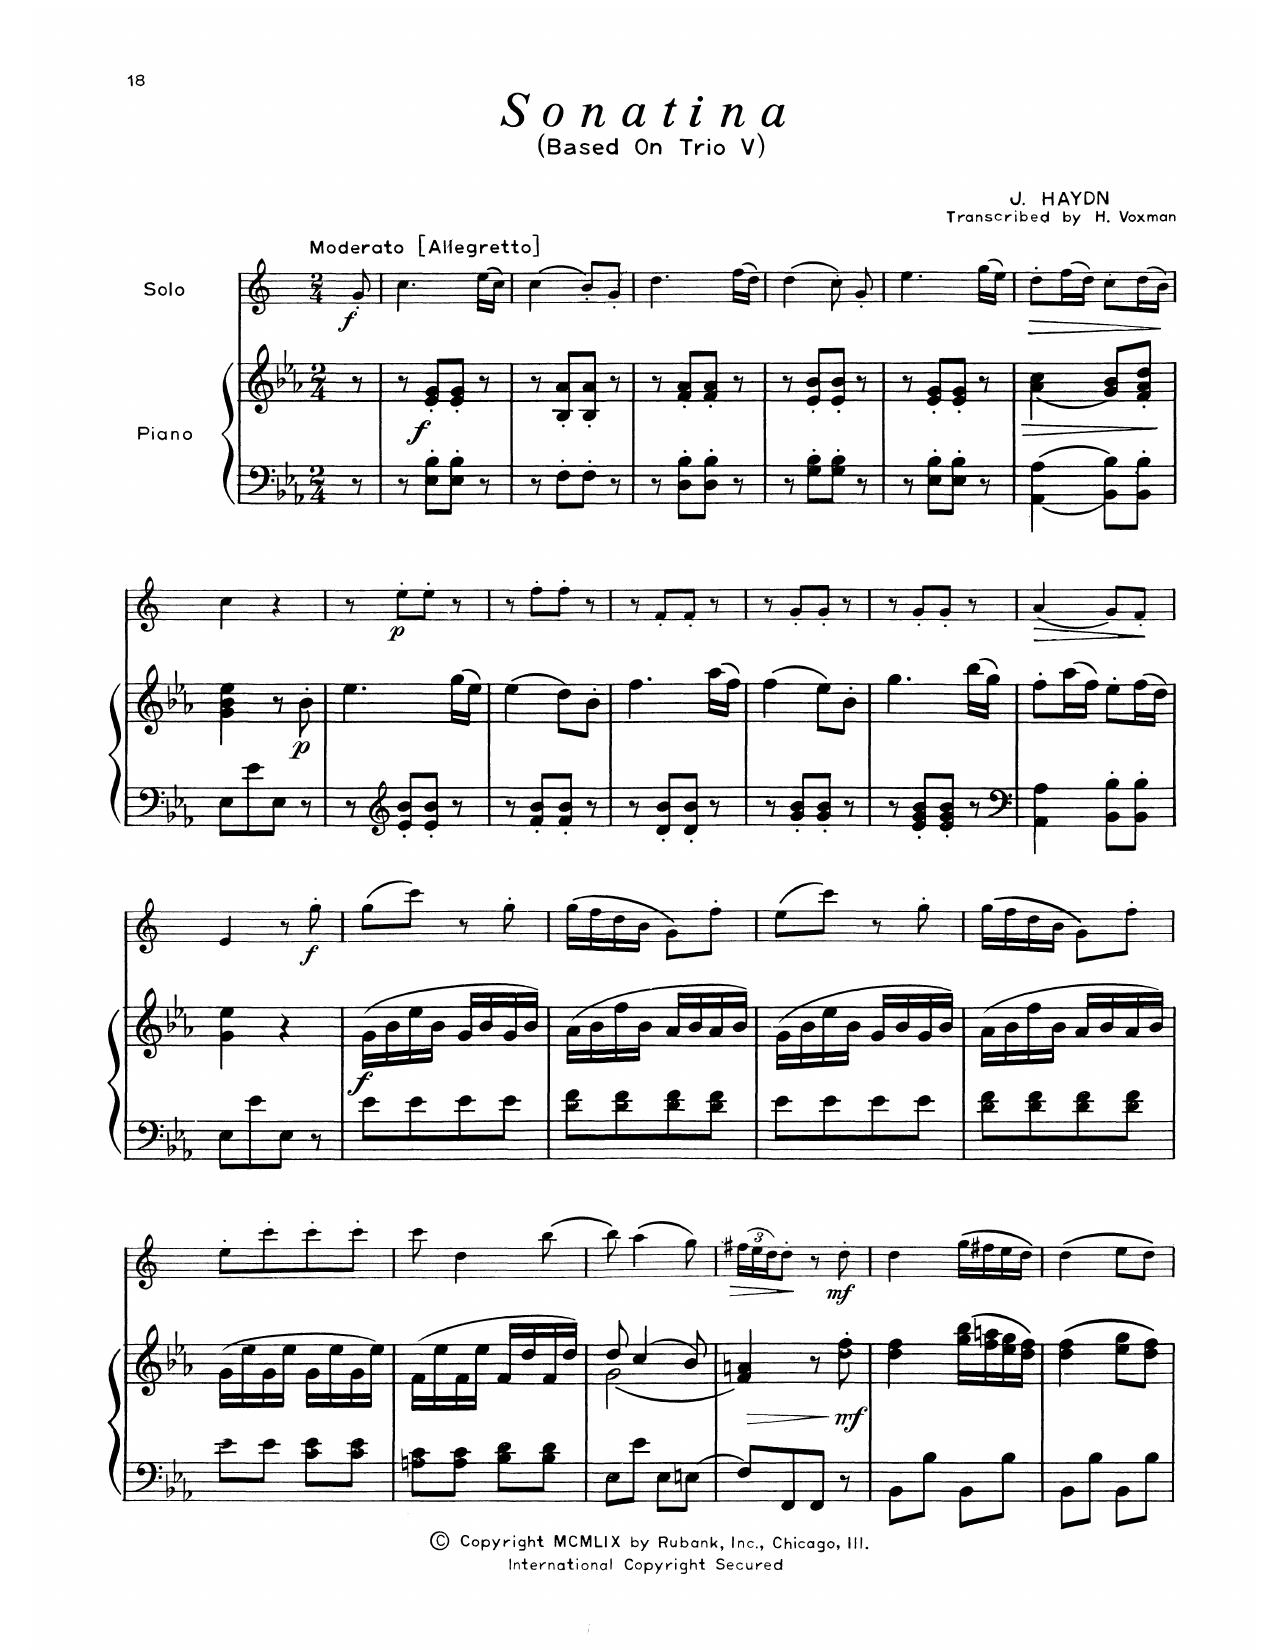 Franz Joseph Haydn Sonatina (Trio V) Sheet Music Notes & Chords for Alto Sax and Piano - Download or Print PDF